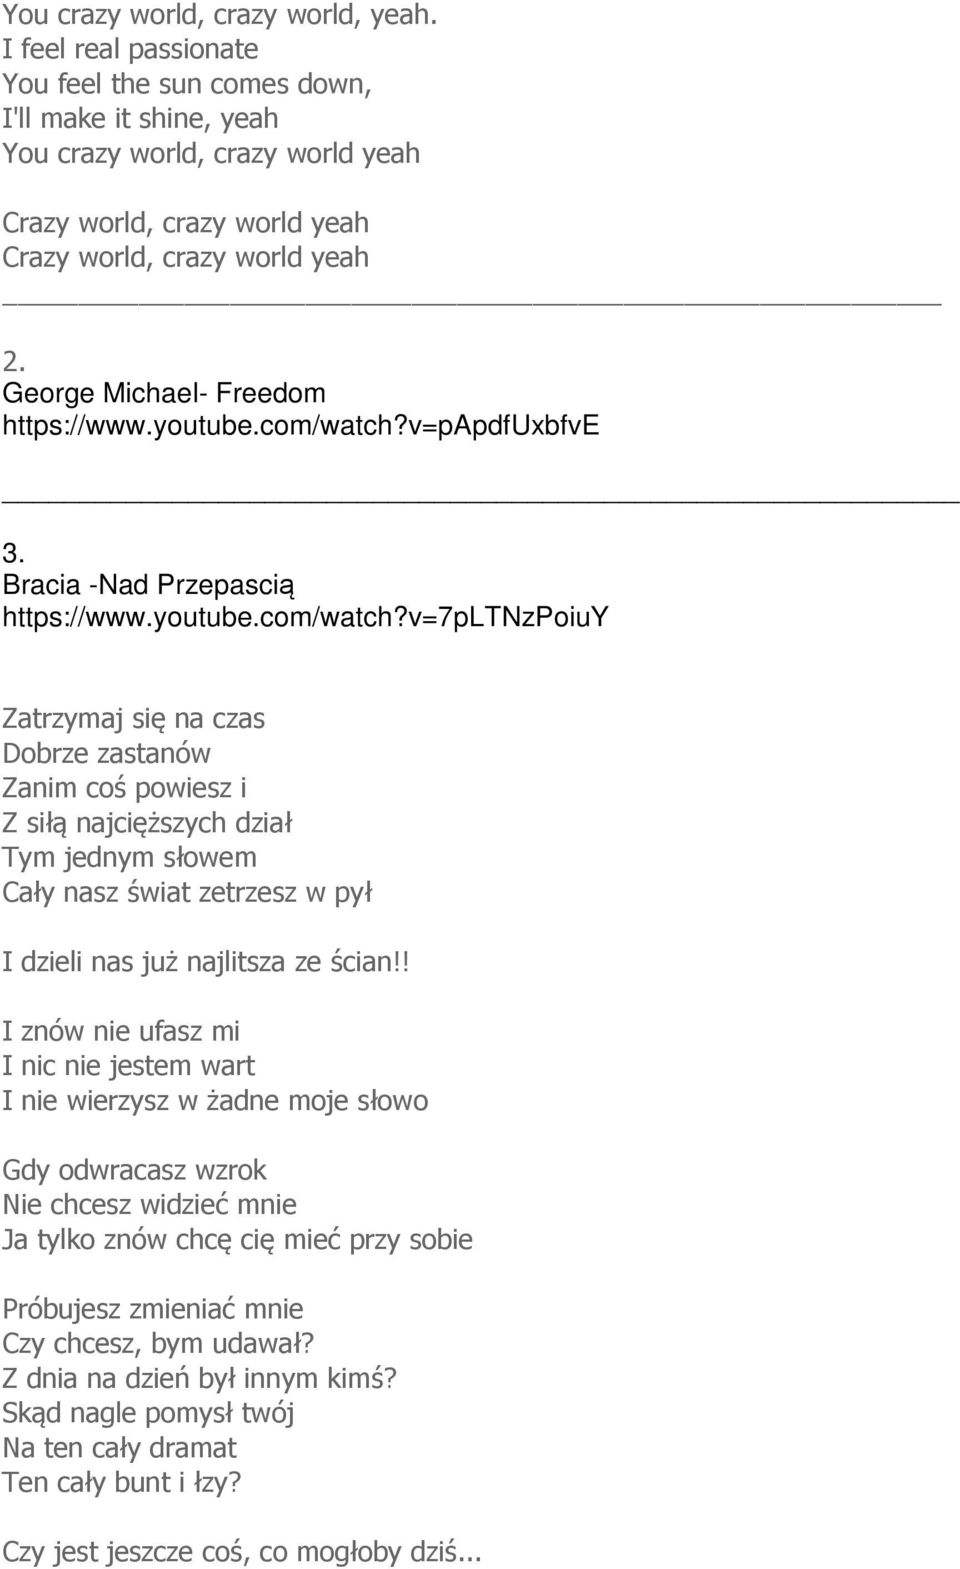 George Michael- Freedom https://www.youtube.com/watch?